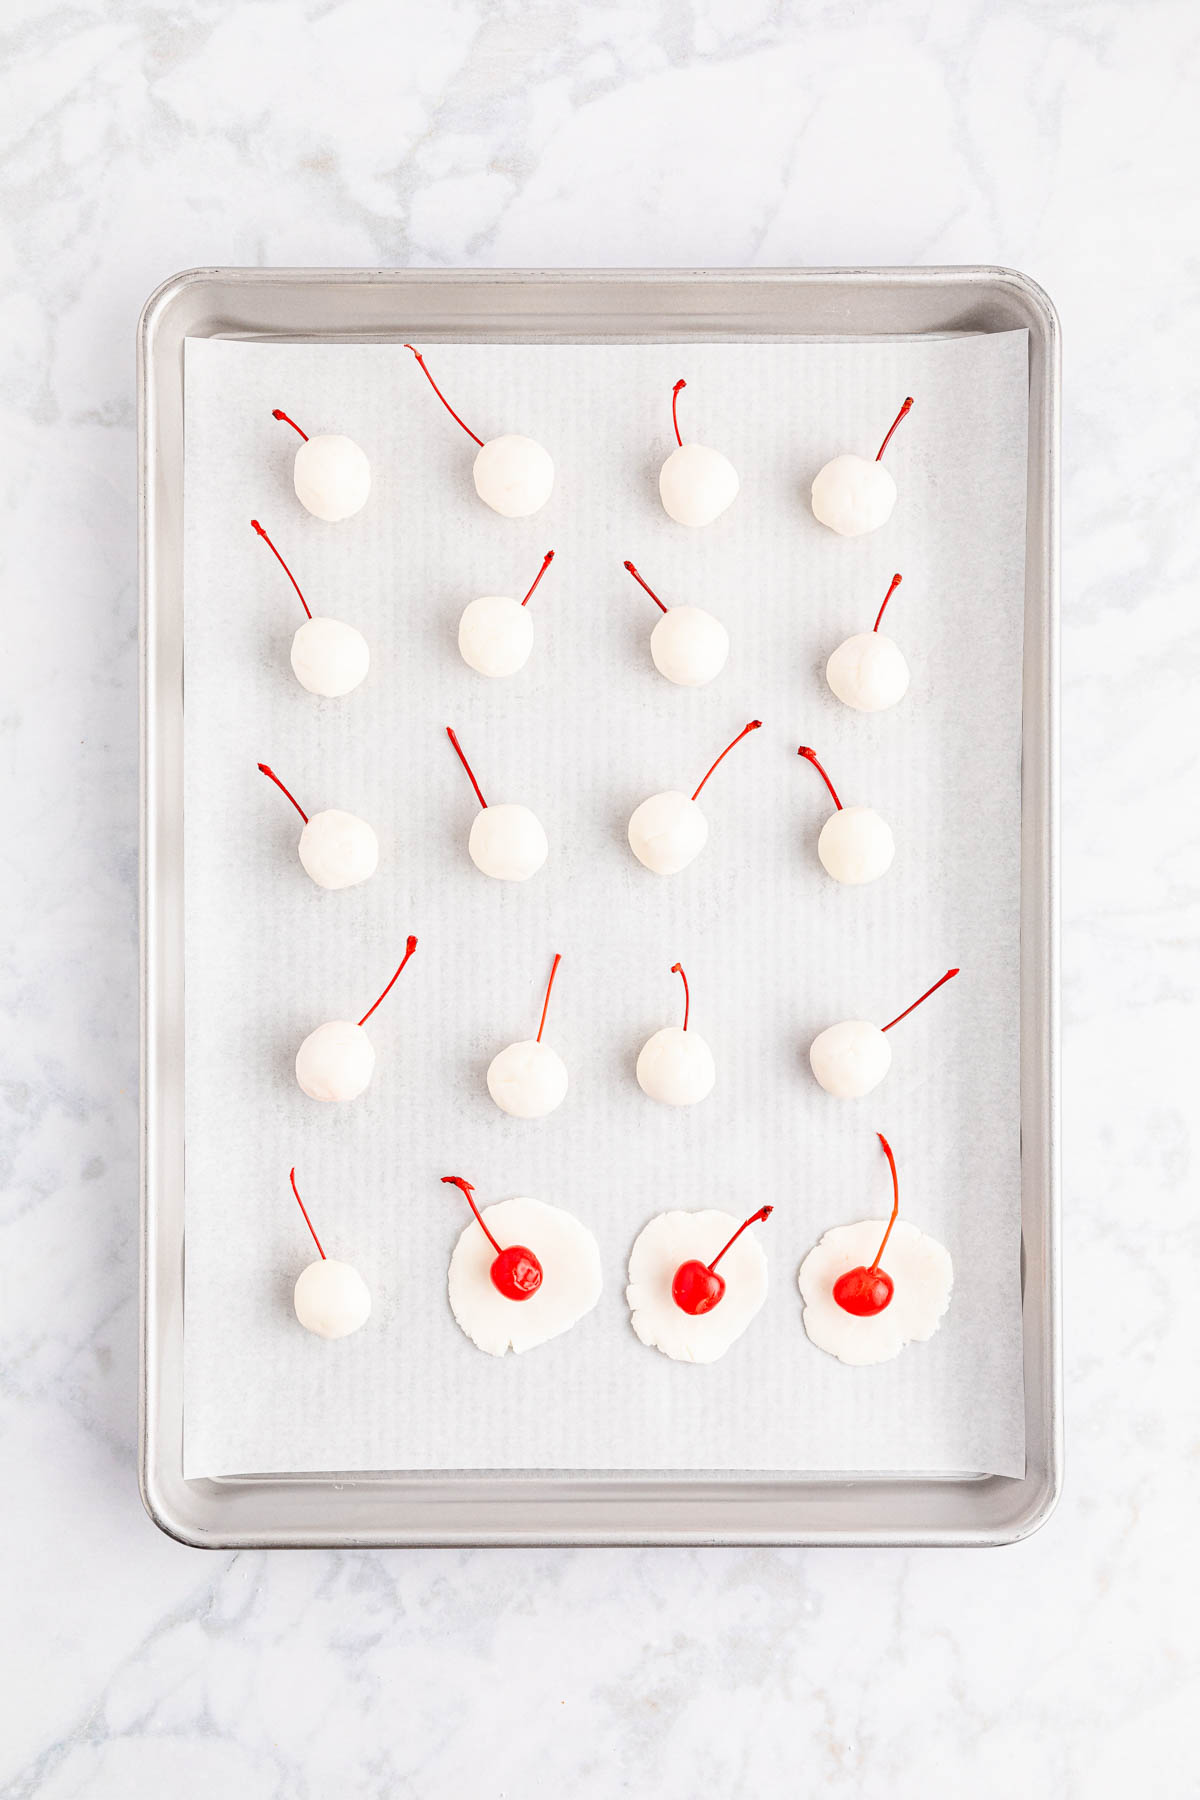 Cherries on a baking sheet with sugar circles